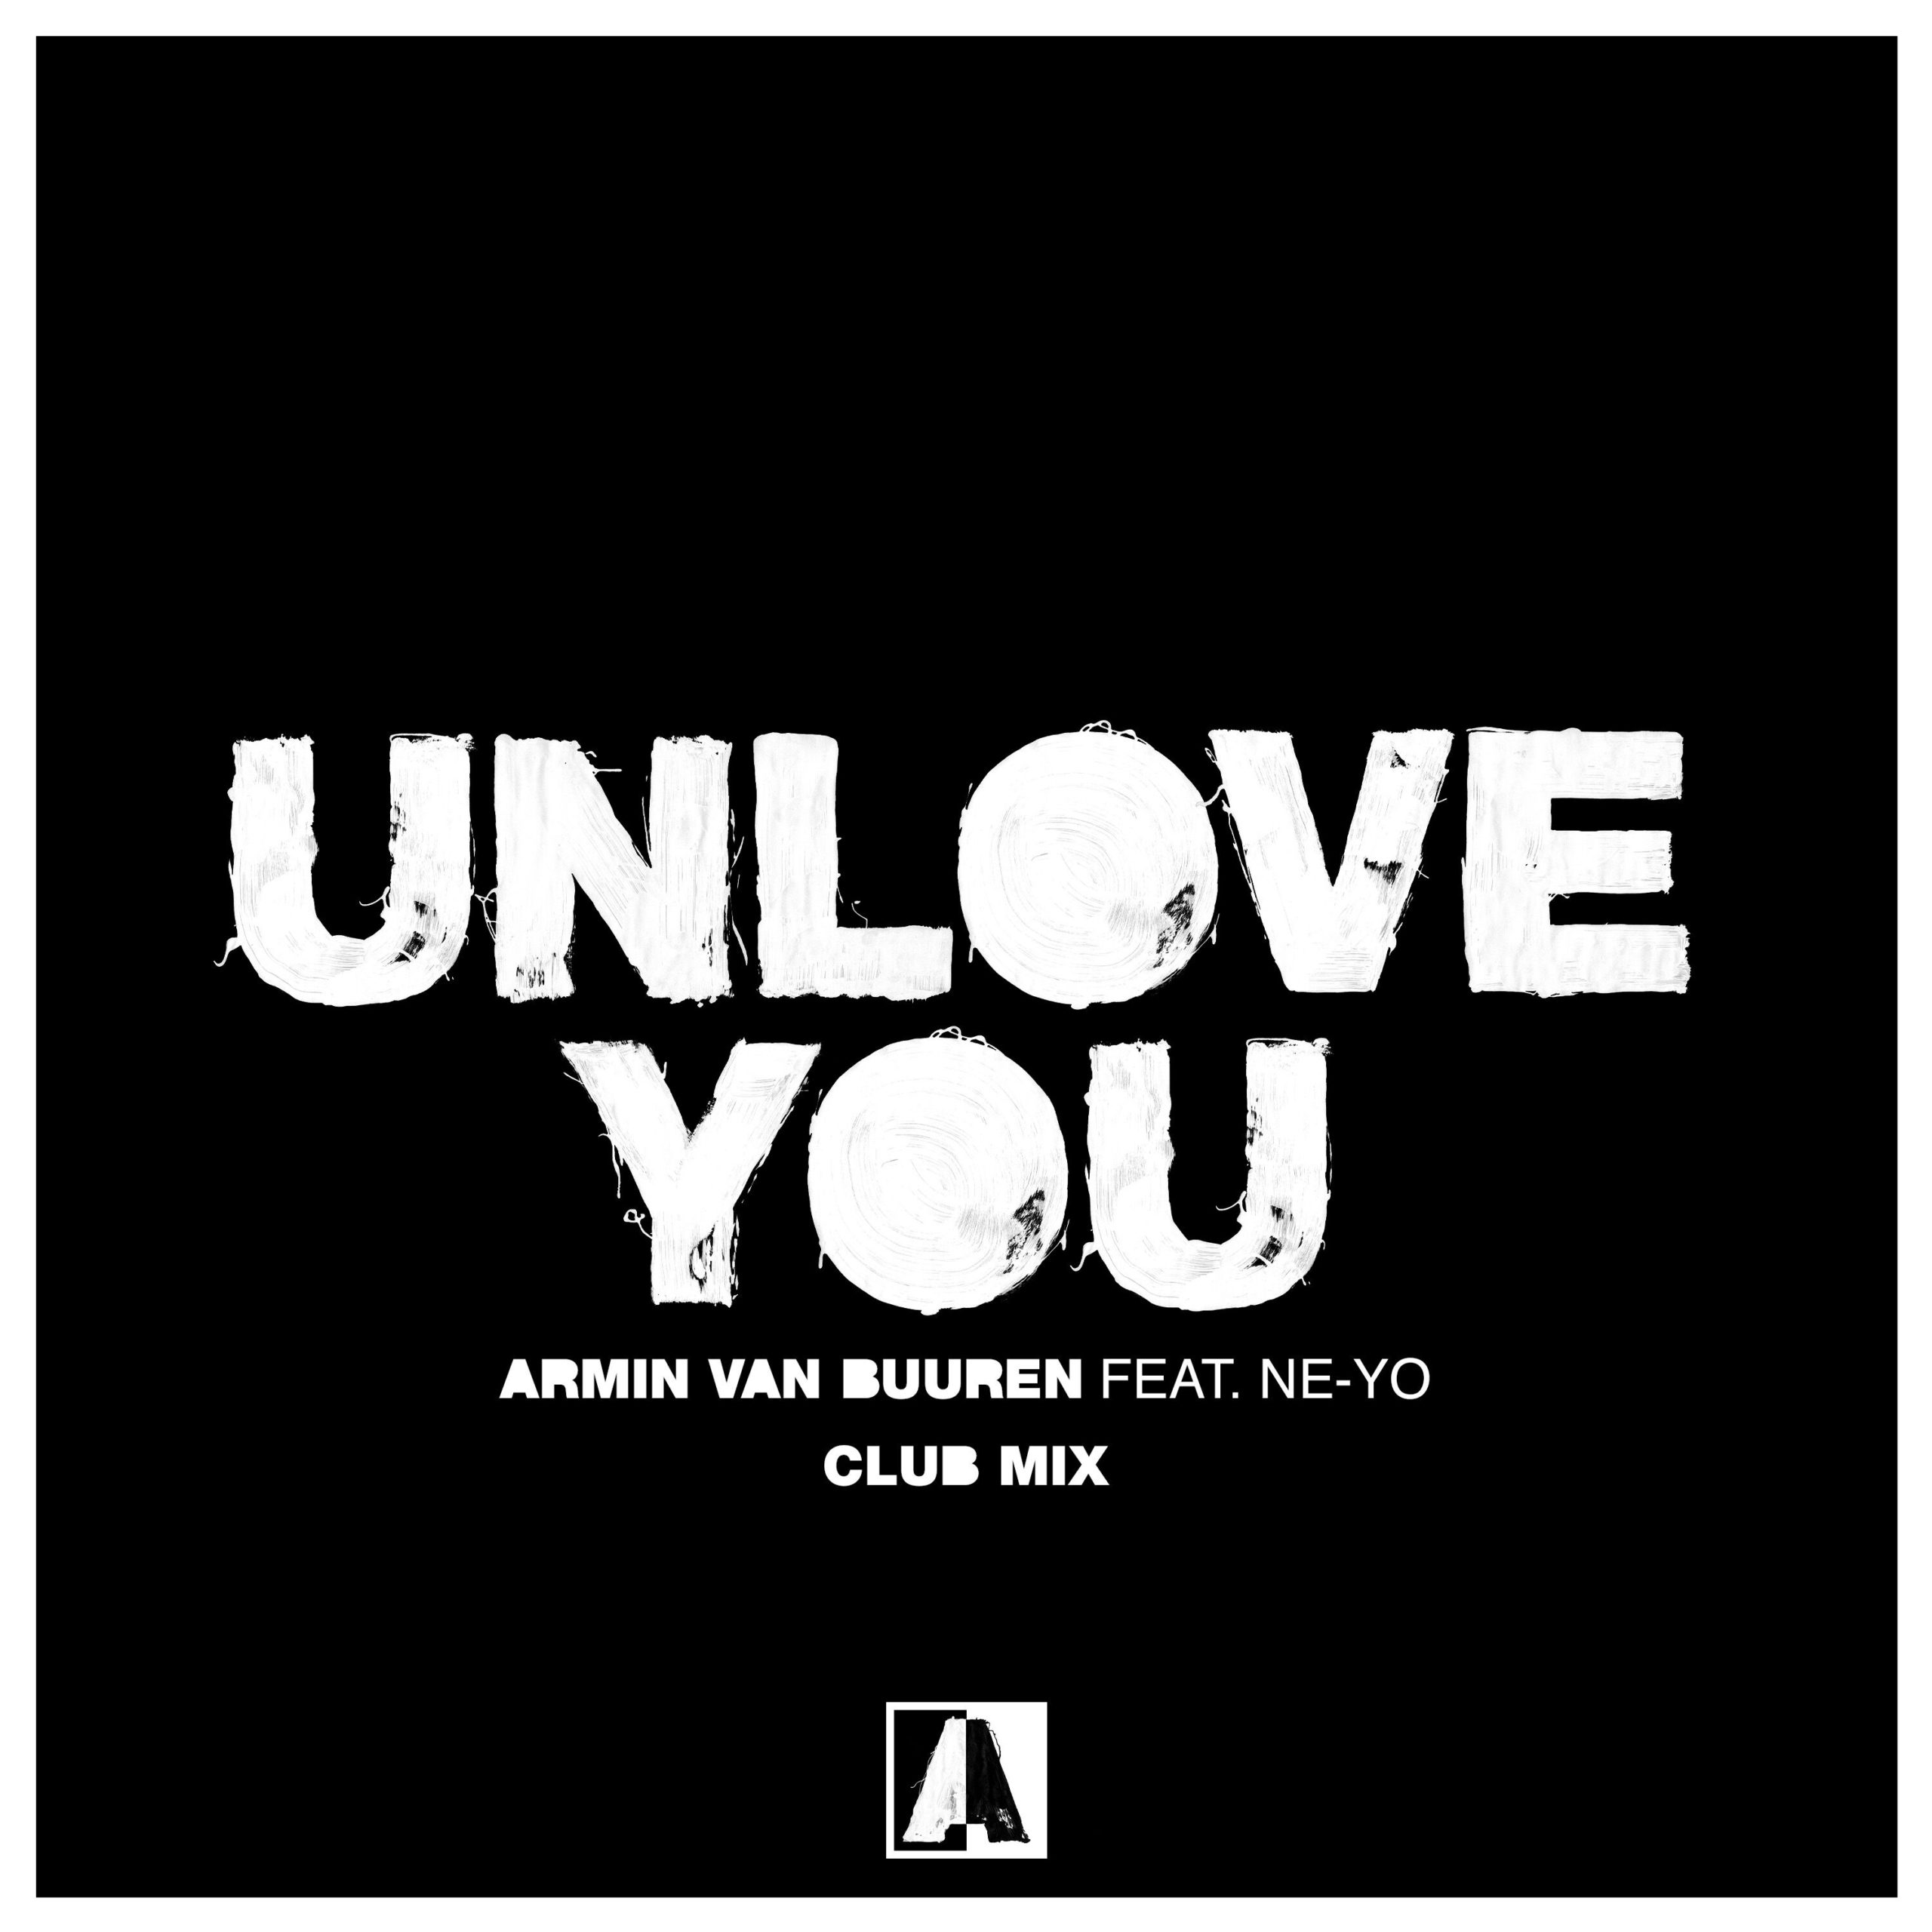 Armin van Buuren feat NE-YO presents Unlove You (Club Mix) on Armada Music